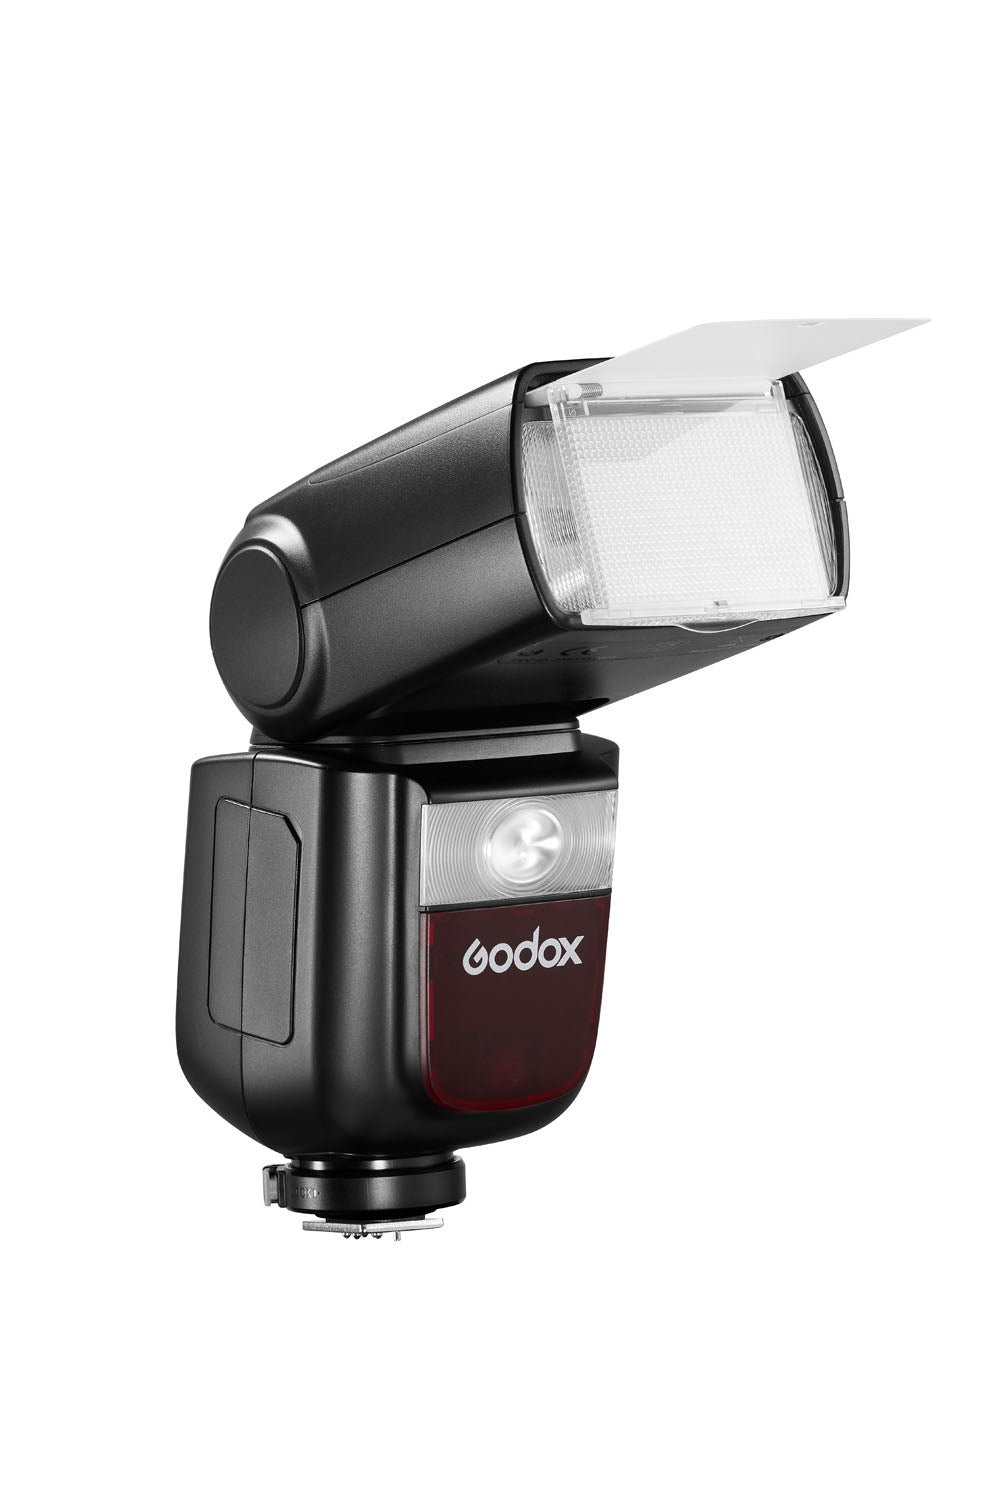 Godox V860III Nikon Speedlight